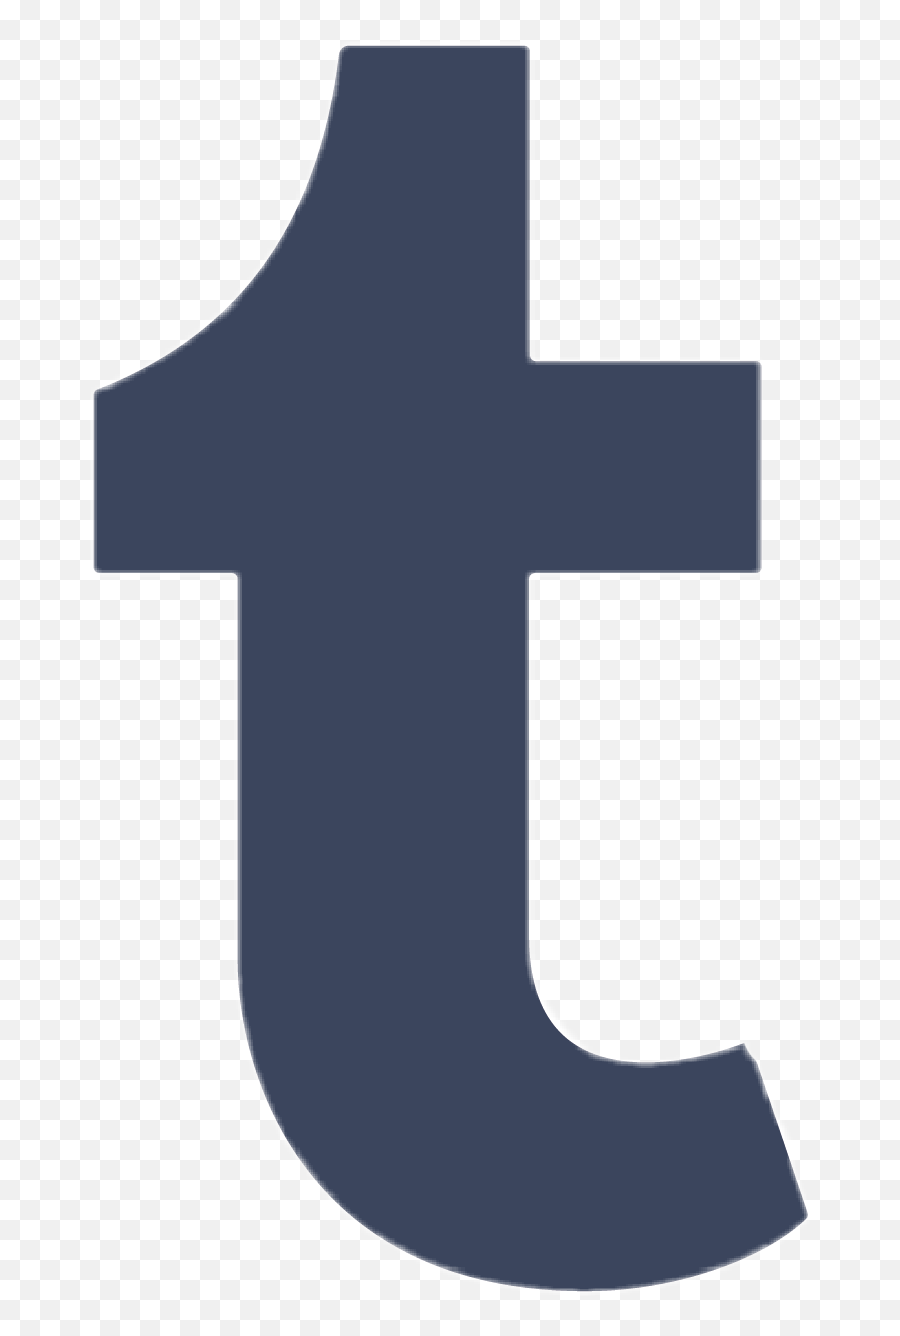 T Letter Socialmedia Sticker By Free Logos - Vector Tumblr Logo Png,Cool Anime Logos